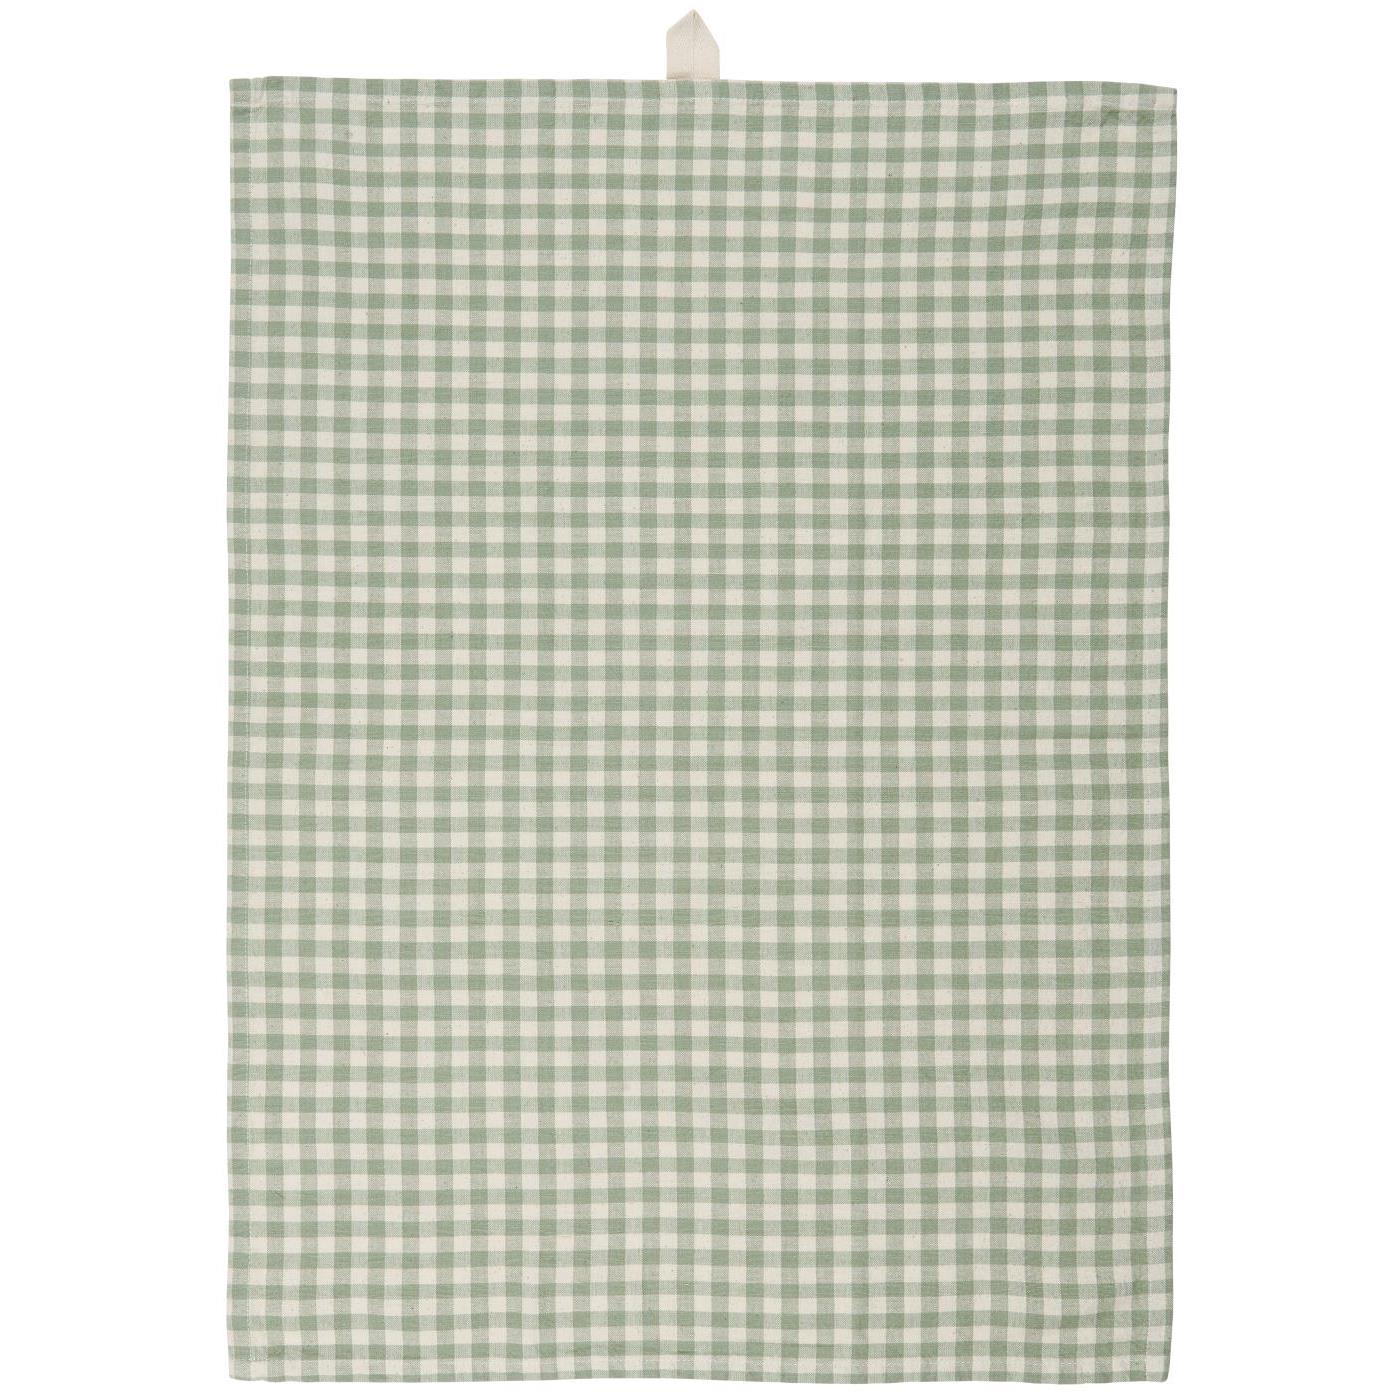 Erik Tea Towel - Dusty Green w/ Natural Checks